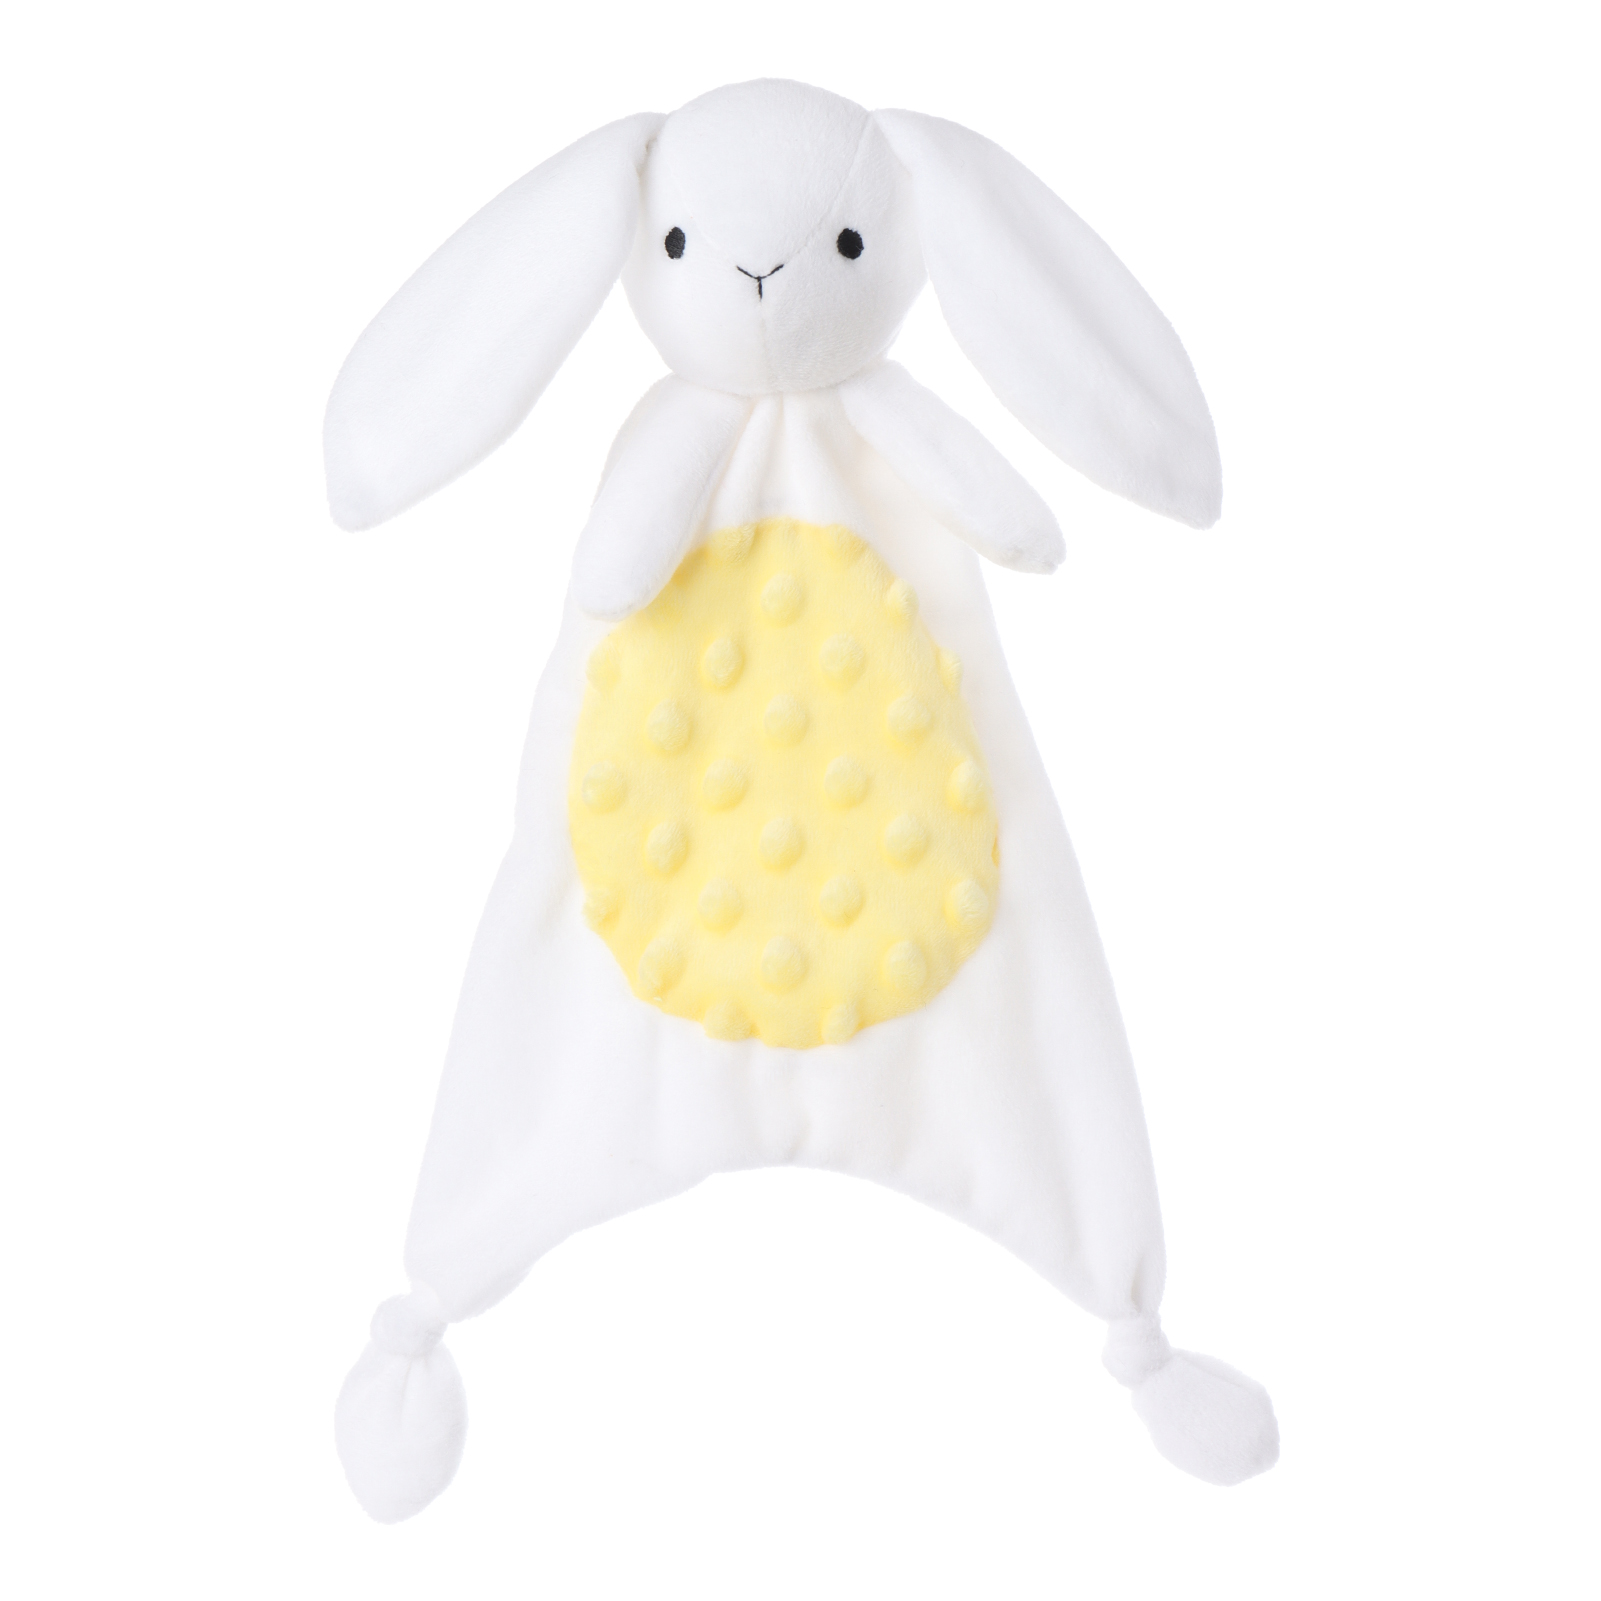 Apicot Lamb Plush Toy Bub-Bunny Security Blanket Baby Lovey Stuffed Animal